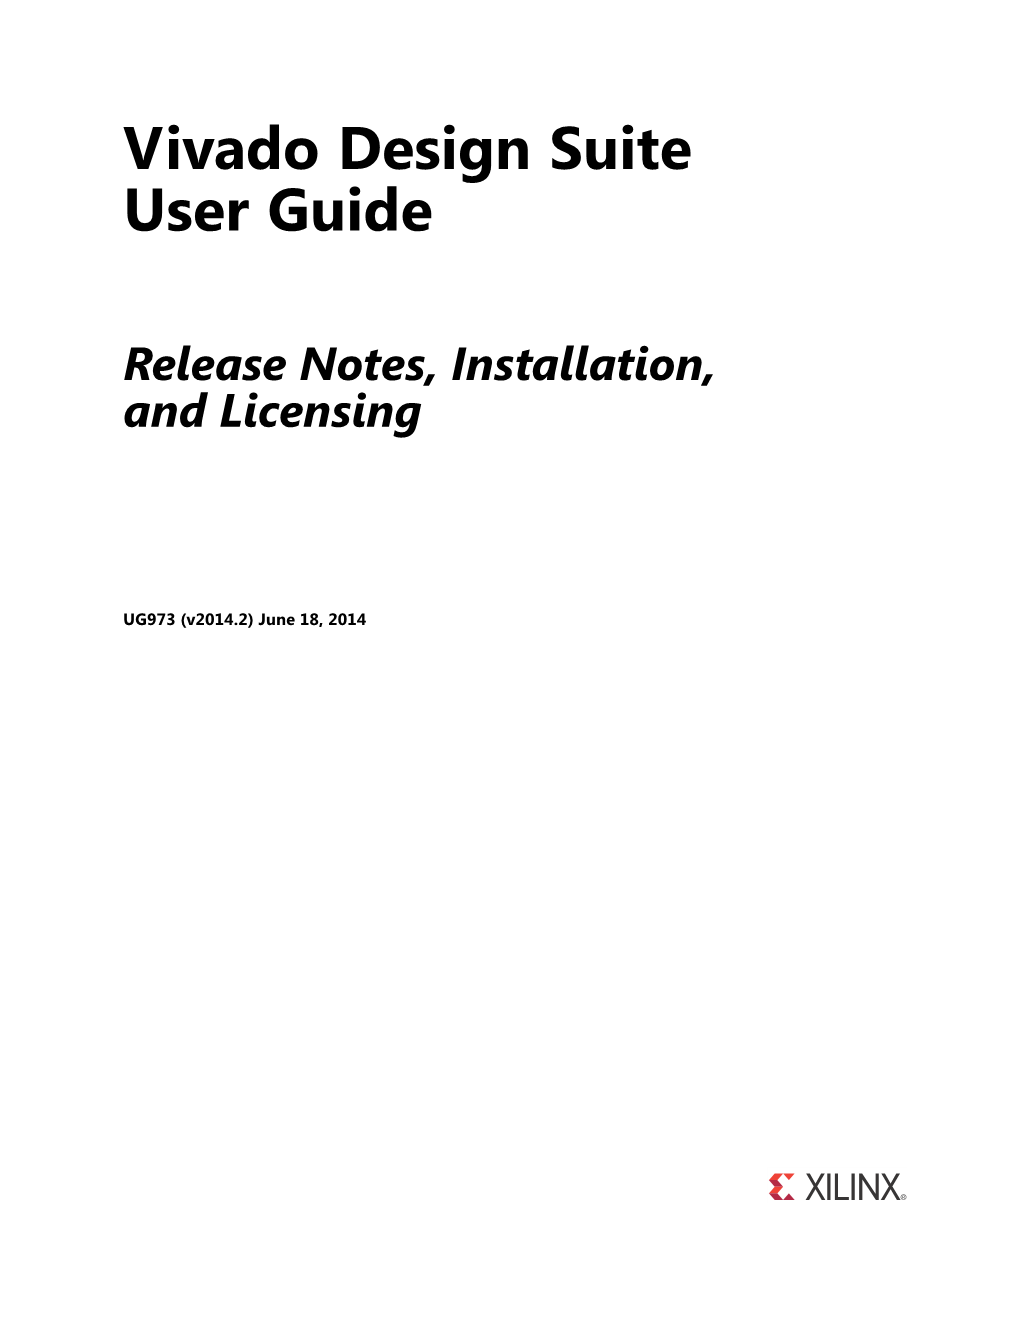 Vivado Design Suite User Guide: Release Notes, Installation, and Licensing (UG973)